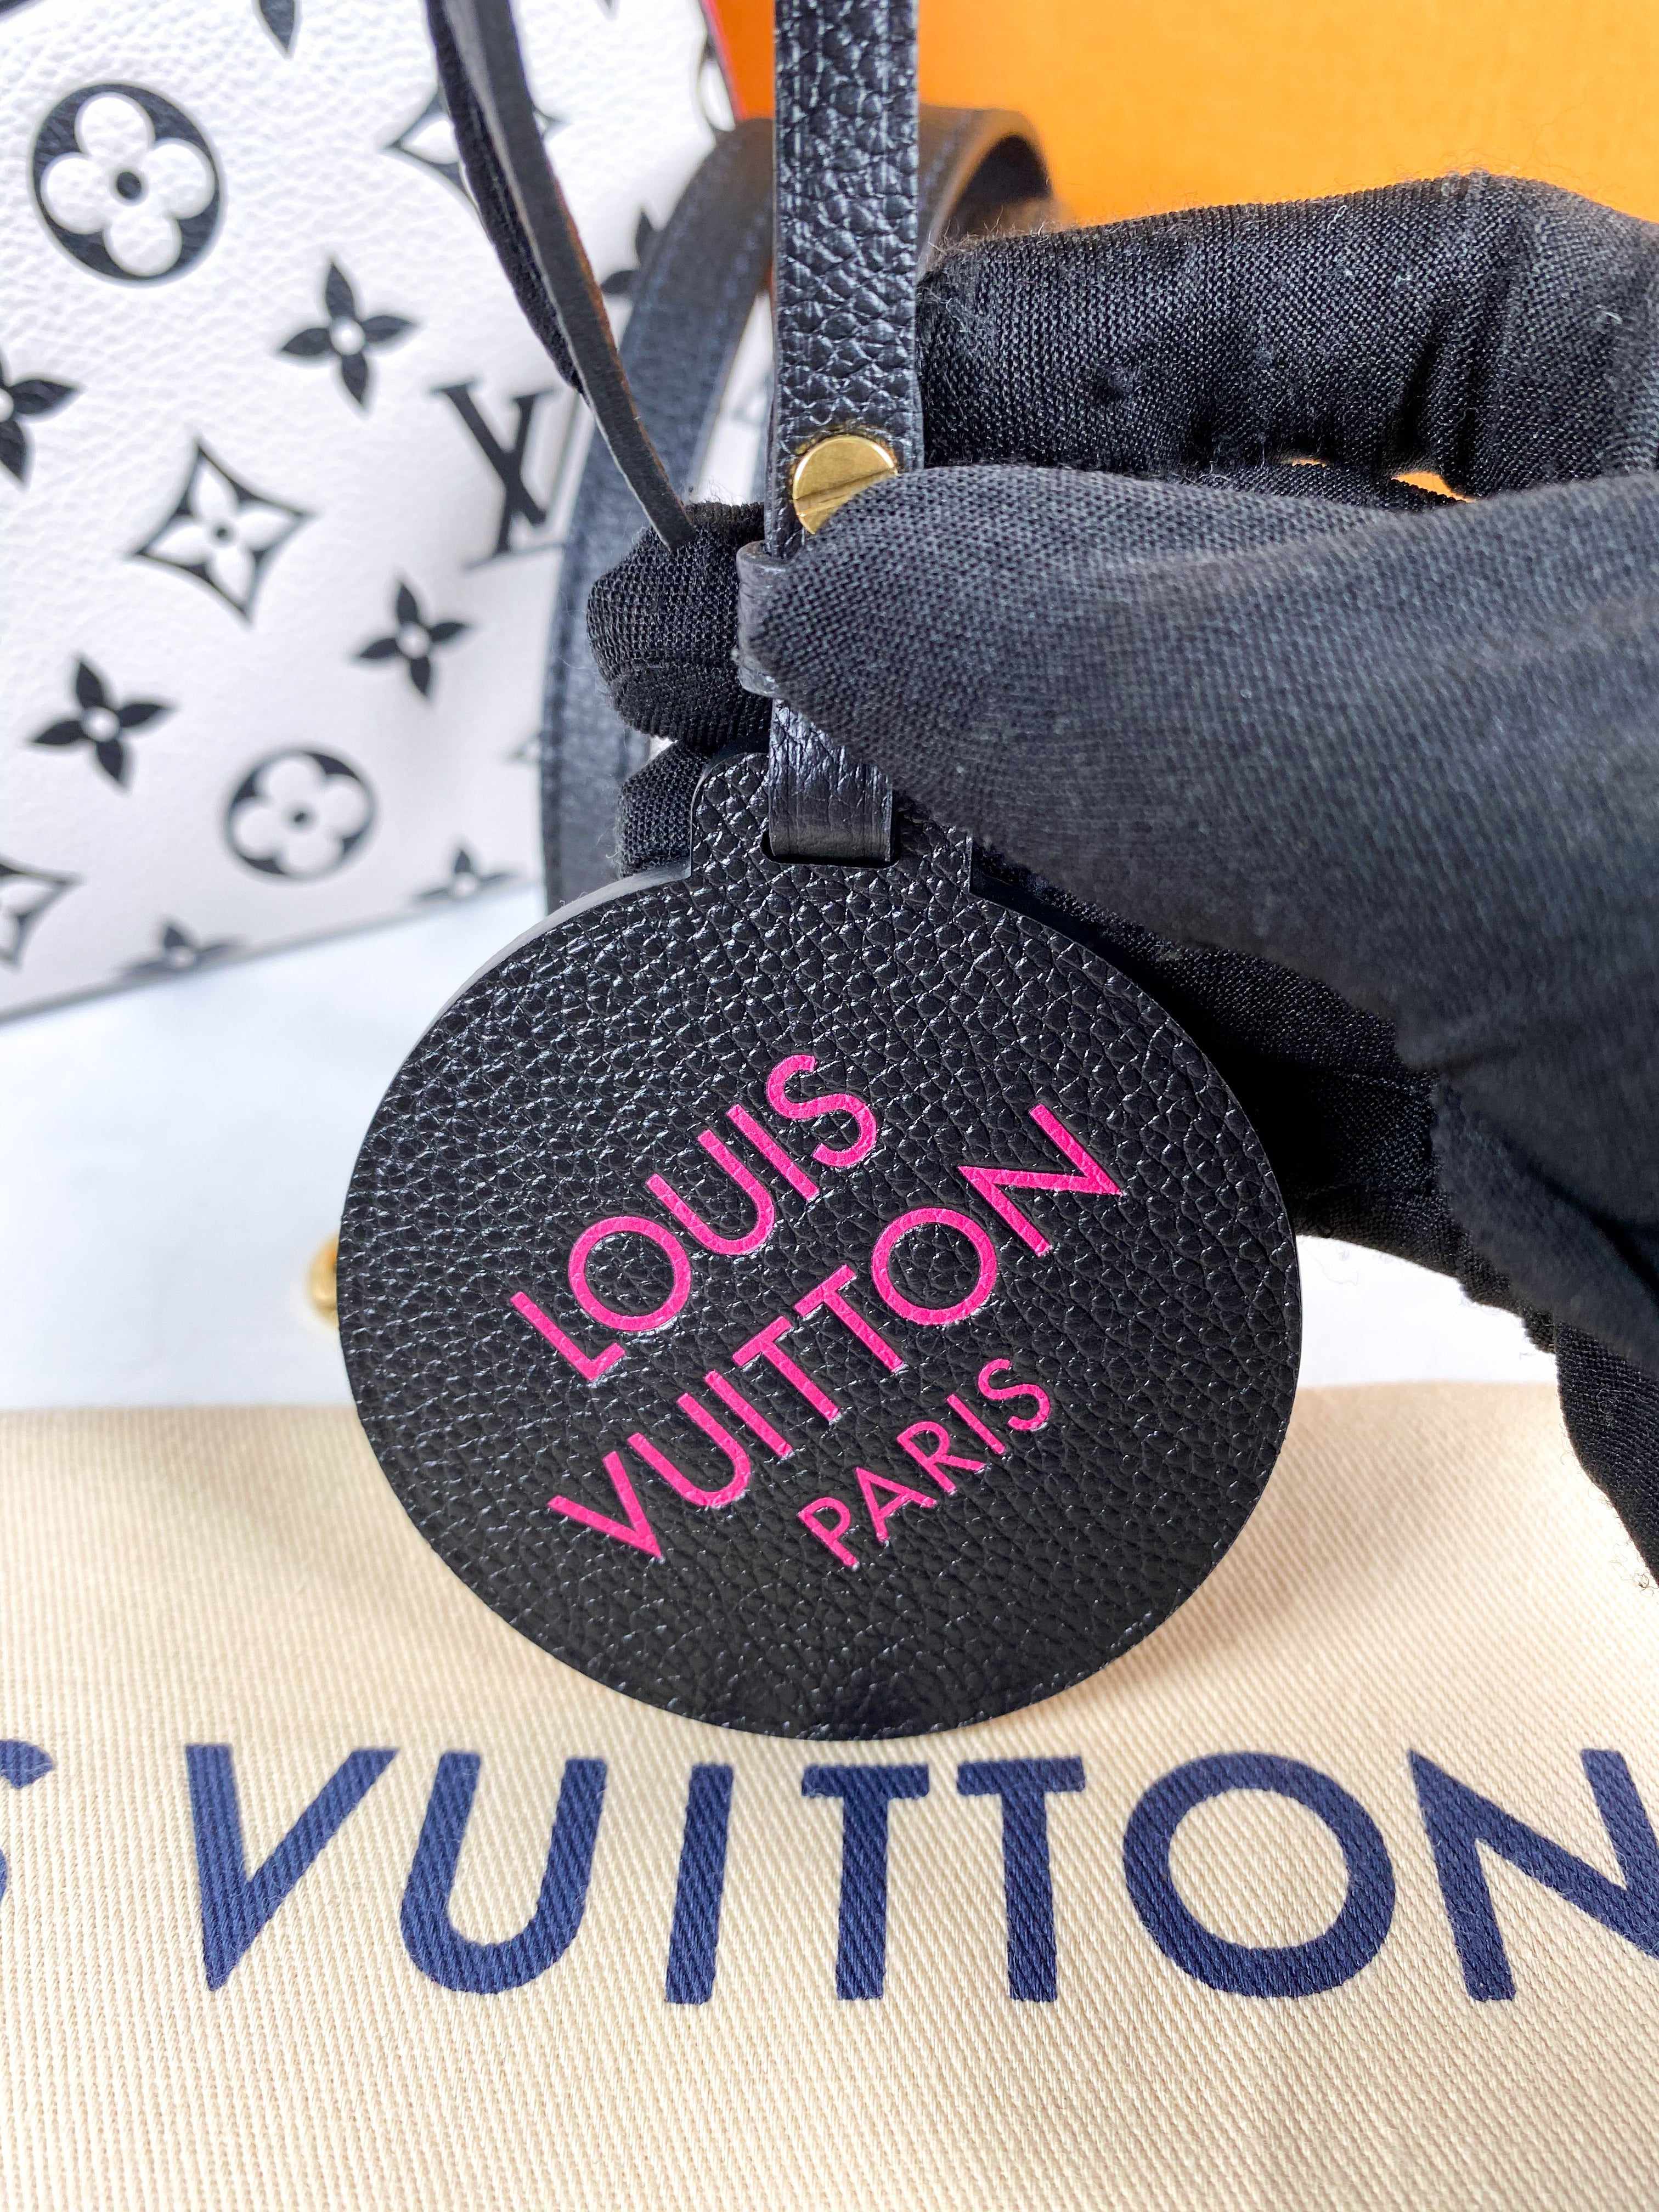 Louis Vuitton Bagatelle NM Spring in the City Black/White/Pink Empreinte Monogram (Microchip)